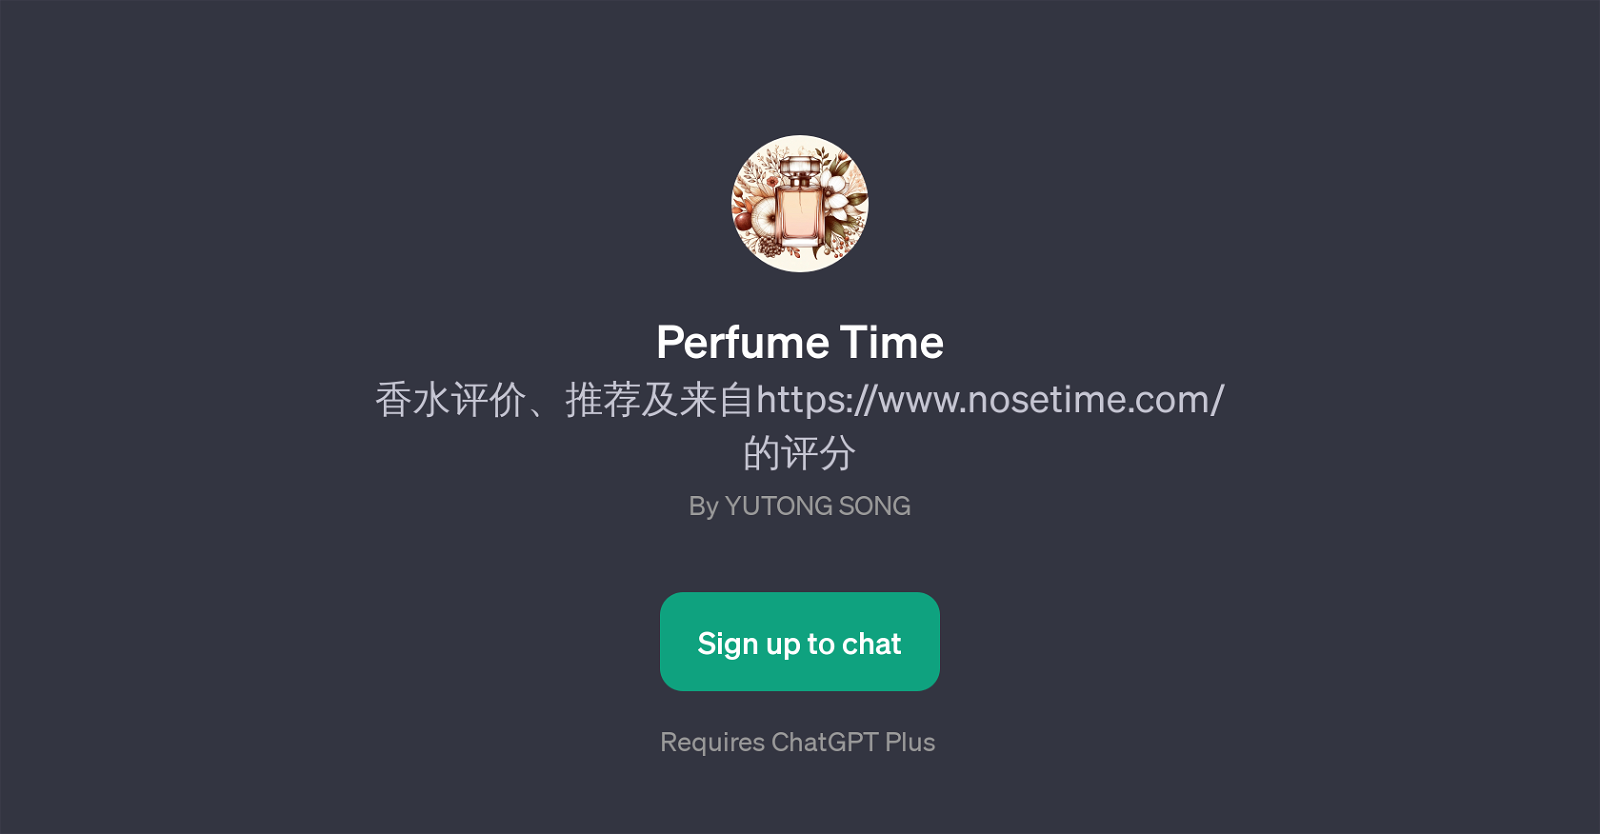 Perfume Time website